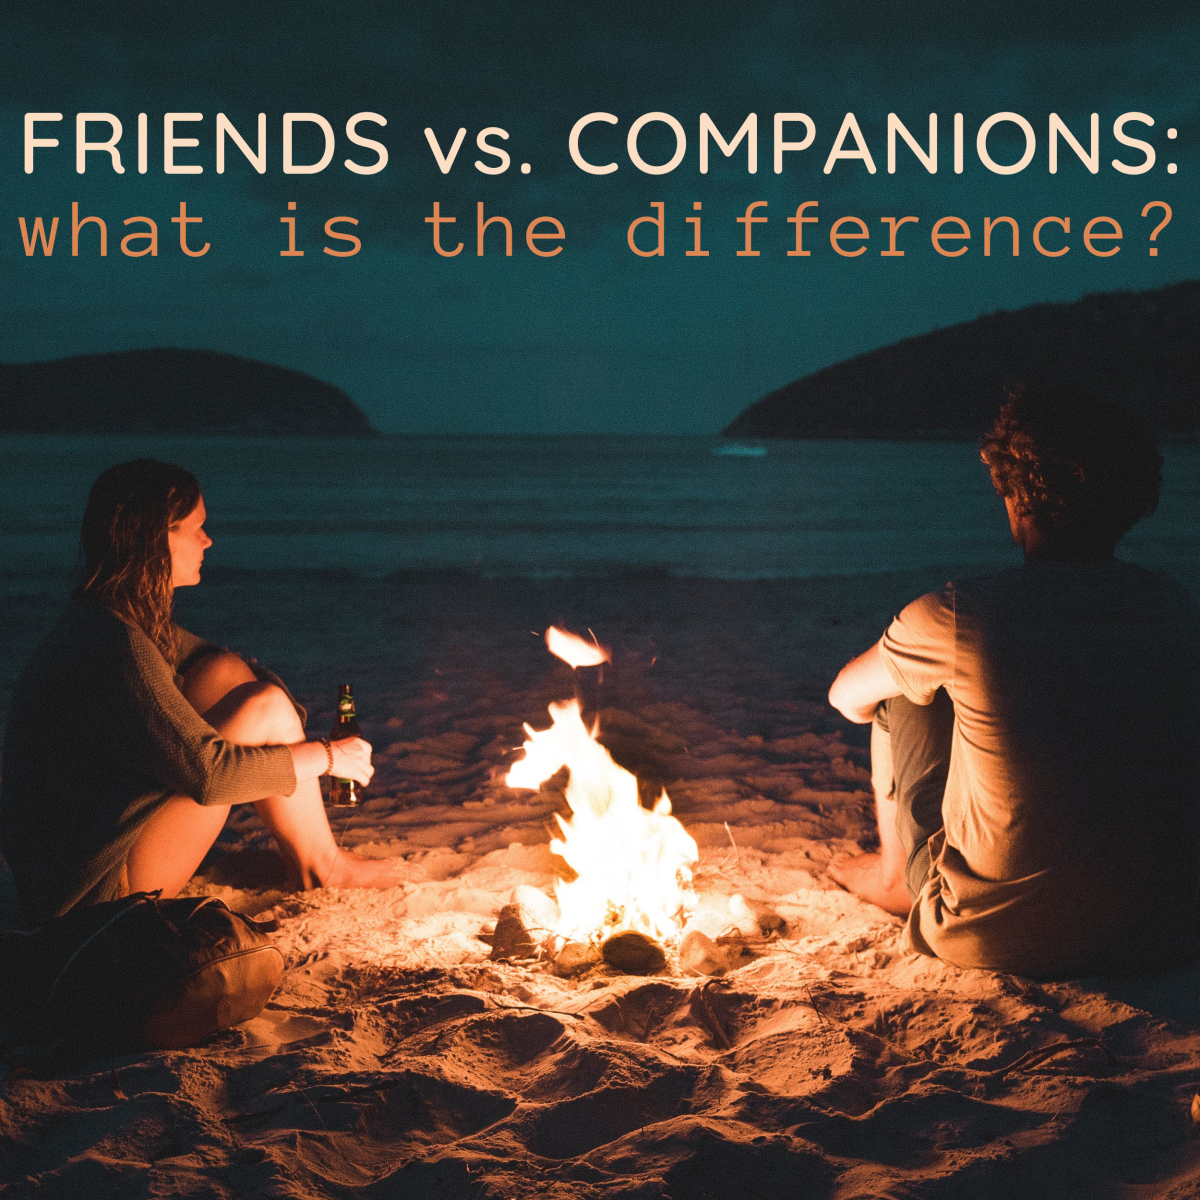 Companionship vs. Friendship